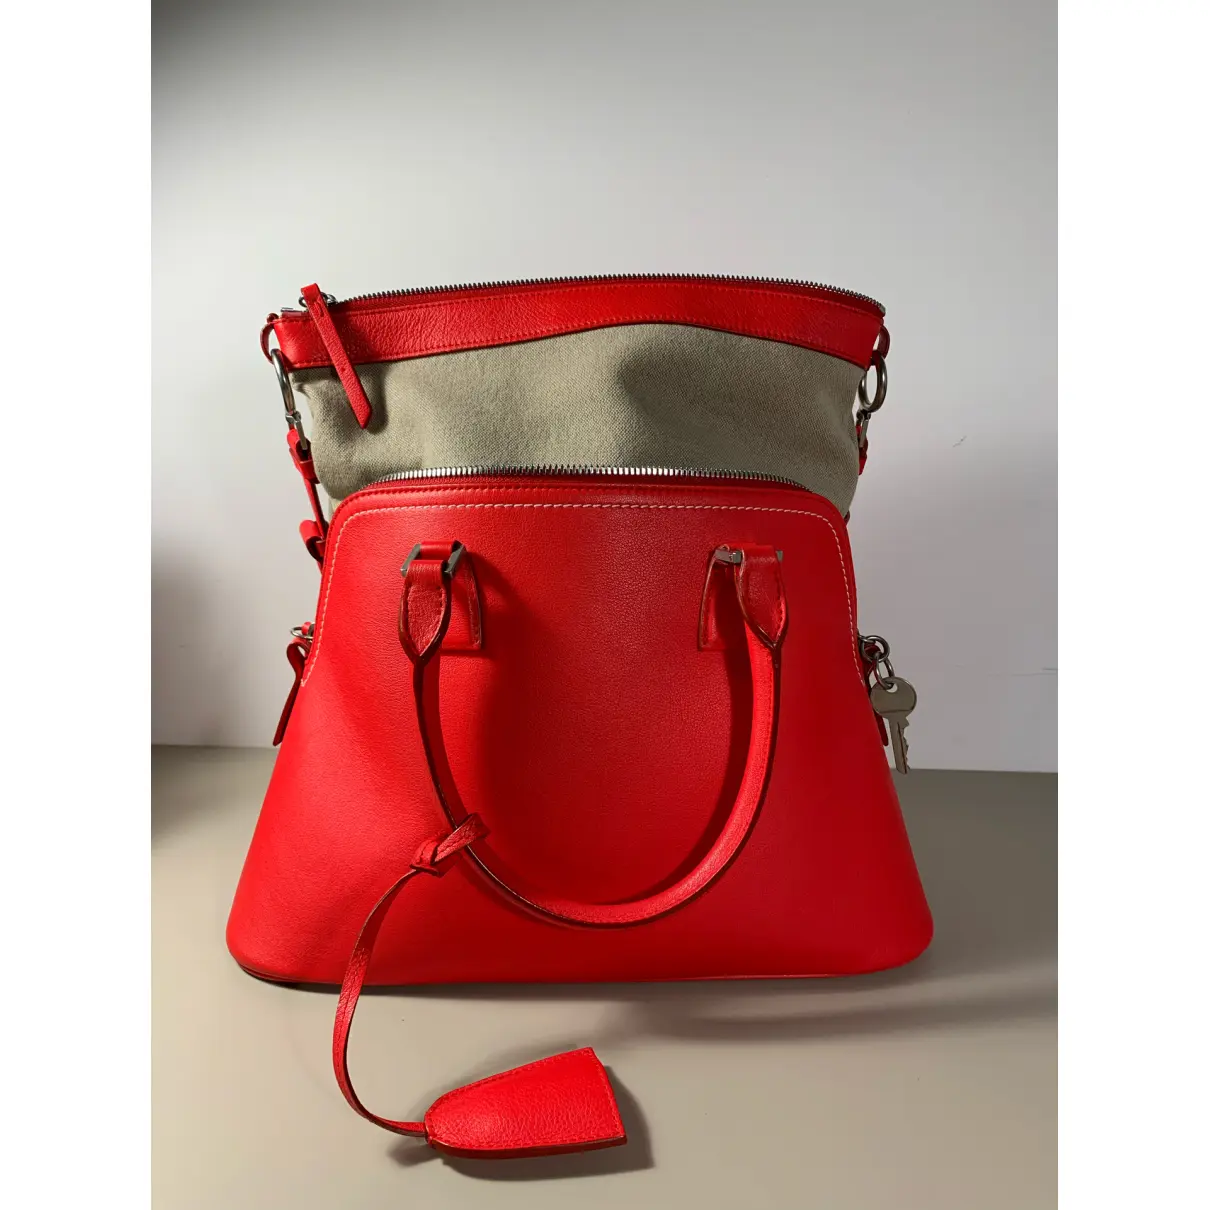 Buy Maison Martin Margiela 5AC leather handbag online